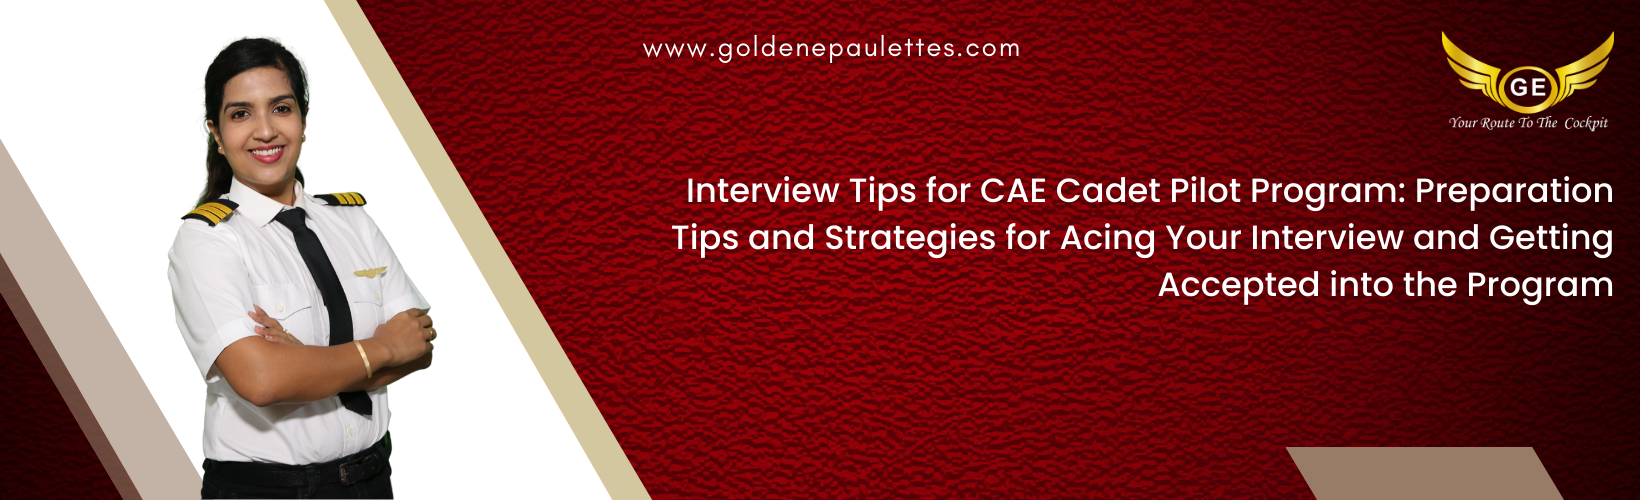 Interview Tips for the CAE Cadet Pilot Program